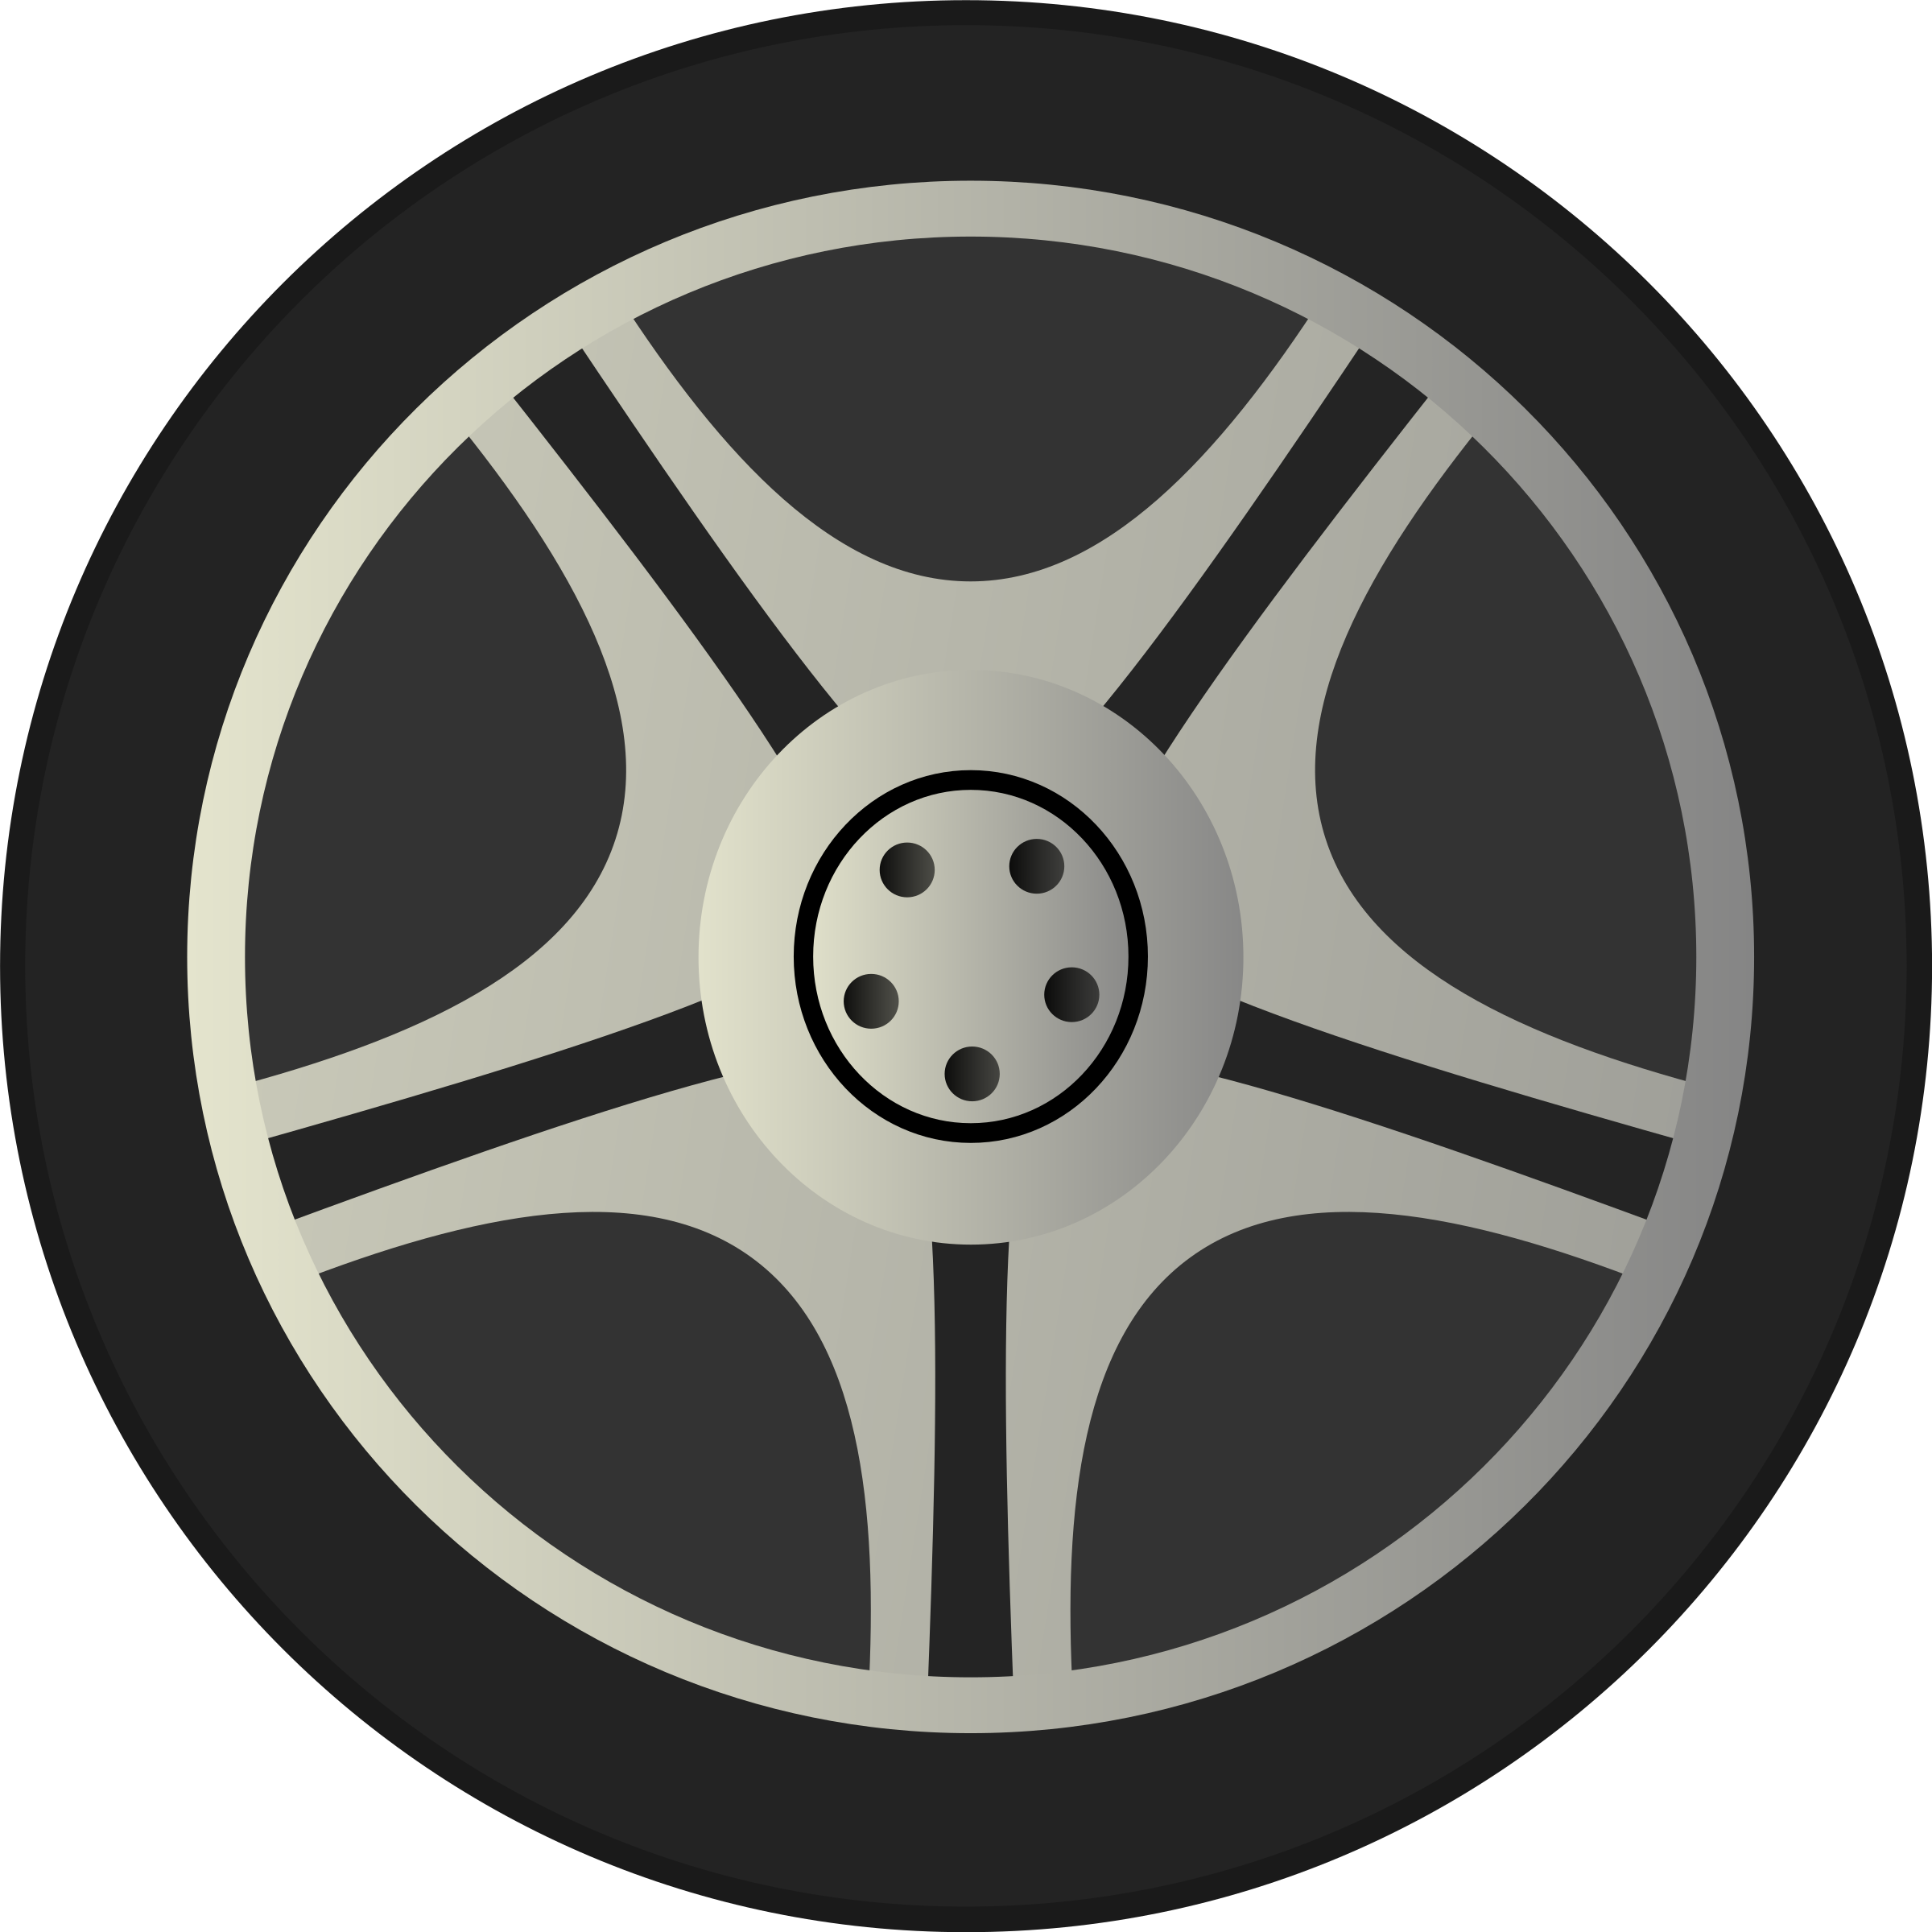 Simple Car Wheel Tire Rims Side View SVG Clip arts